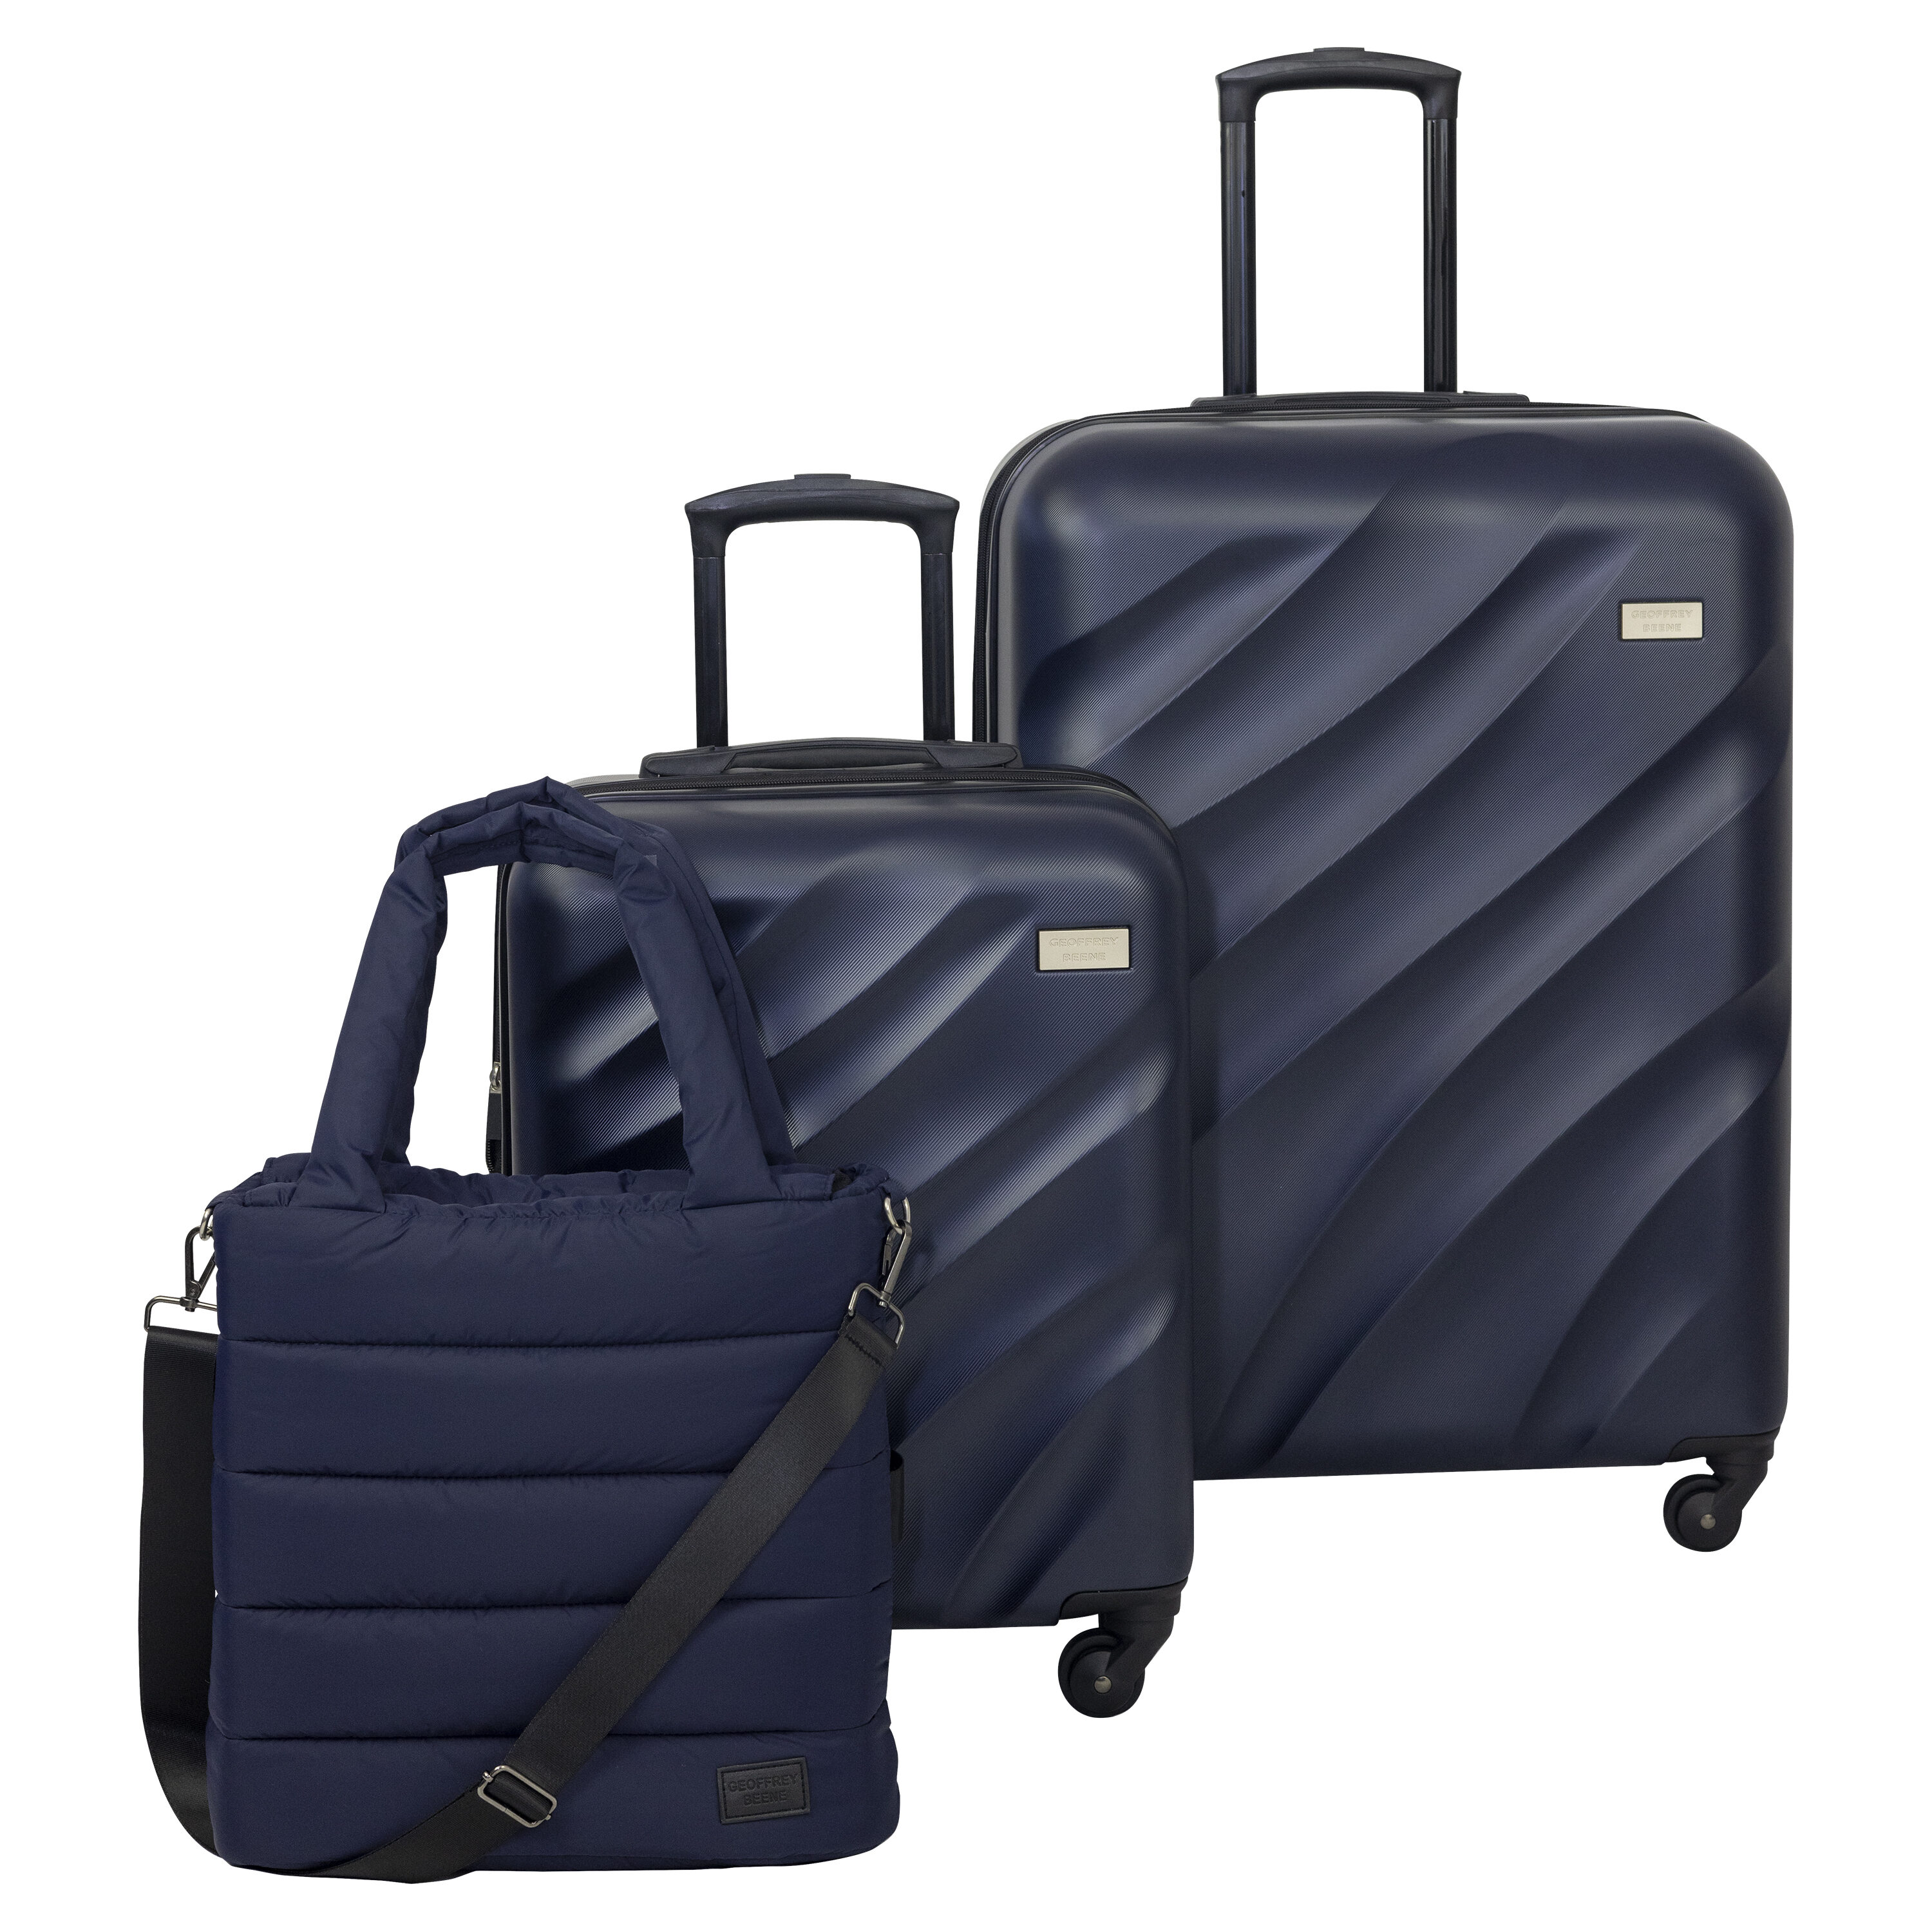 Dakota by Tumi Travel Bag Replacement Luggage Wheels - 9.75